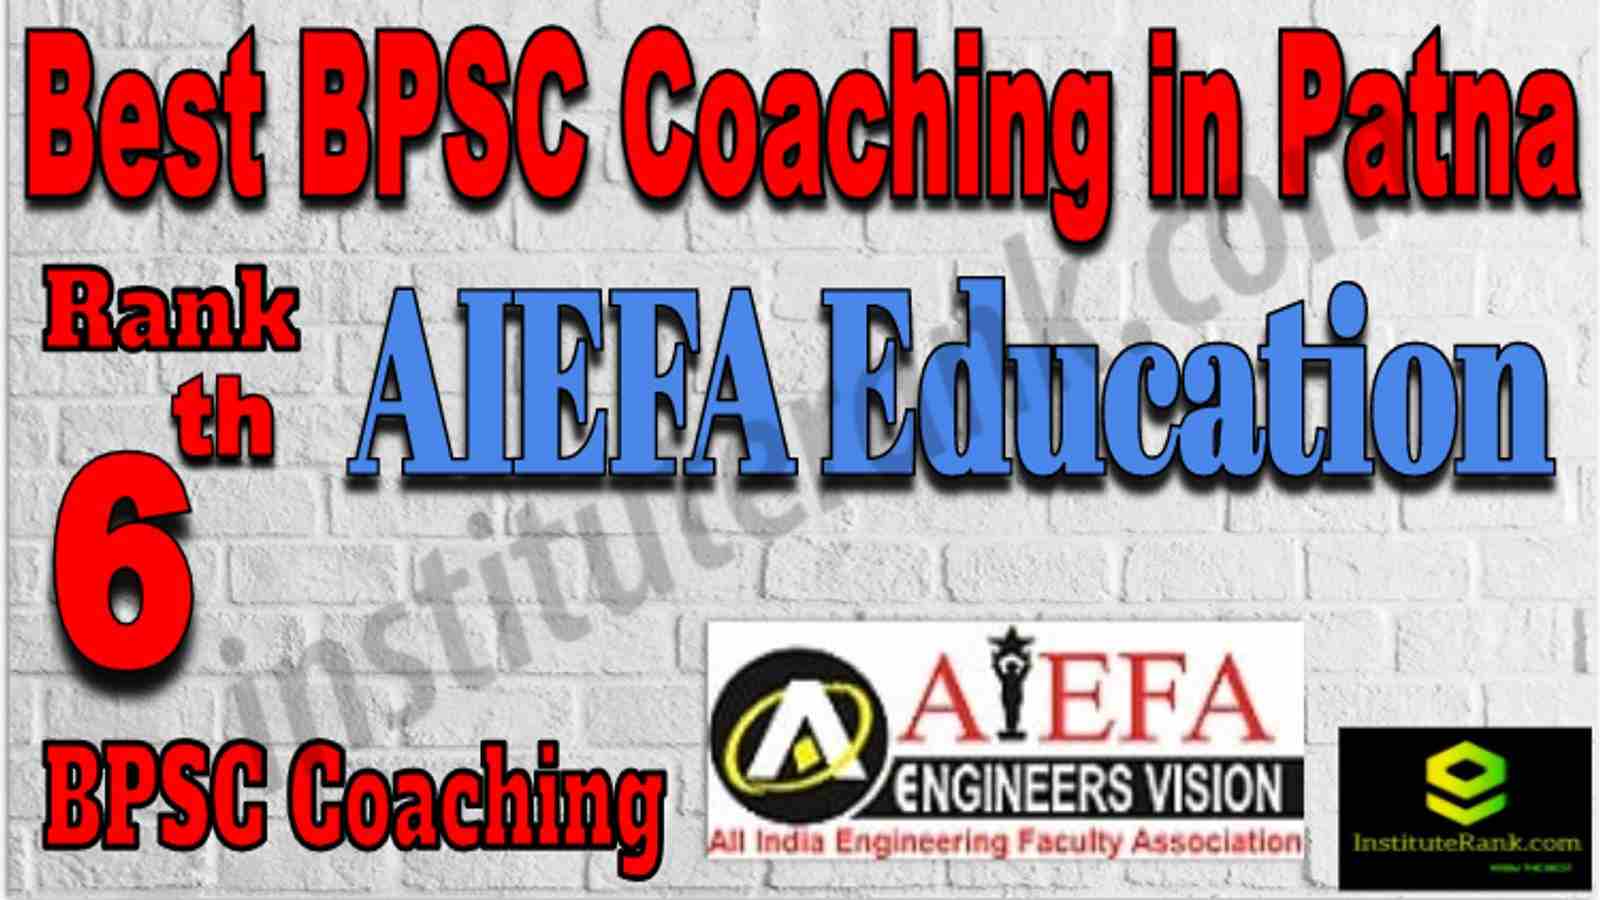 Rank 6 Best BPSC Coaching in Patna